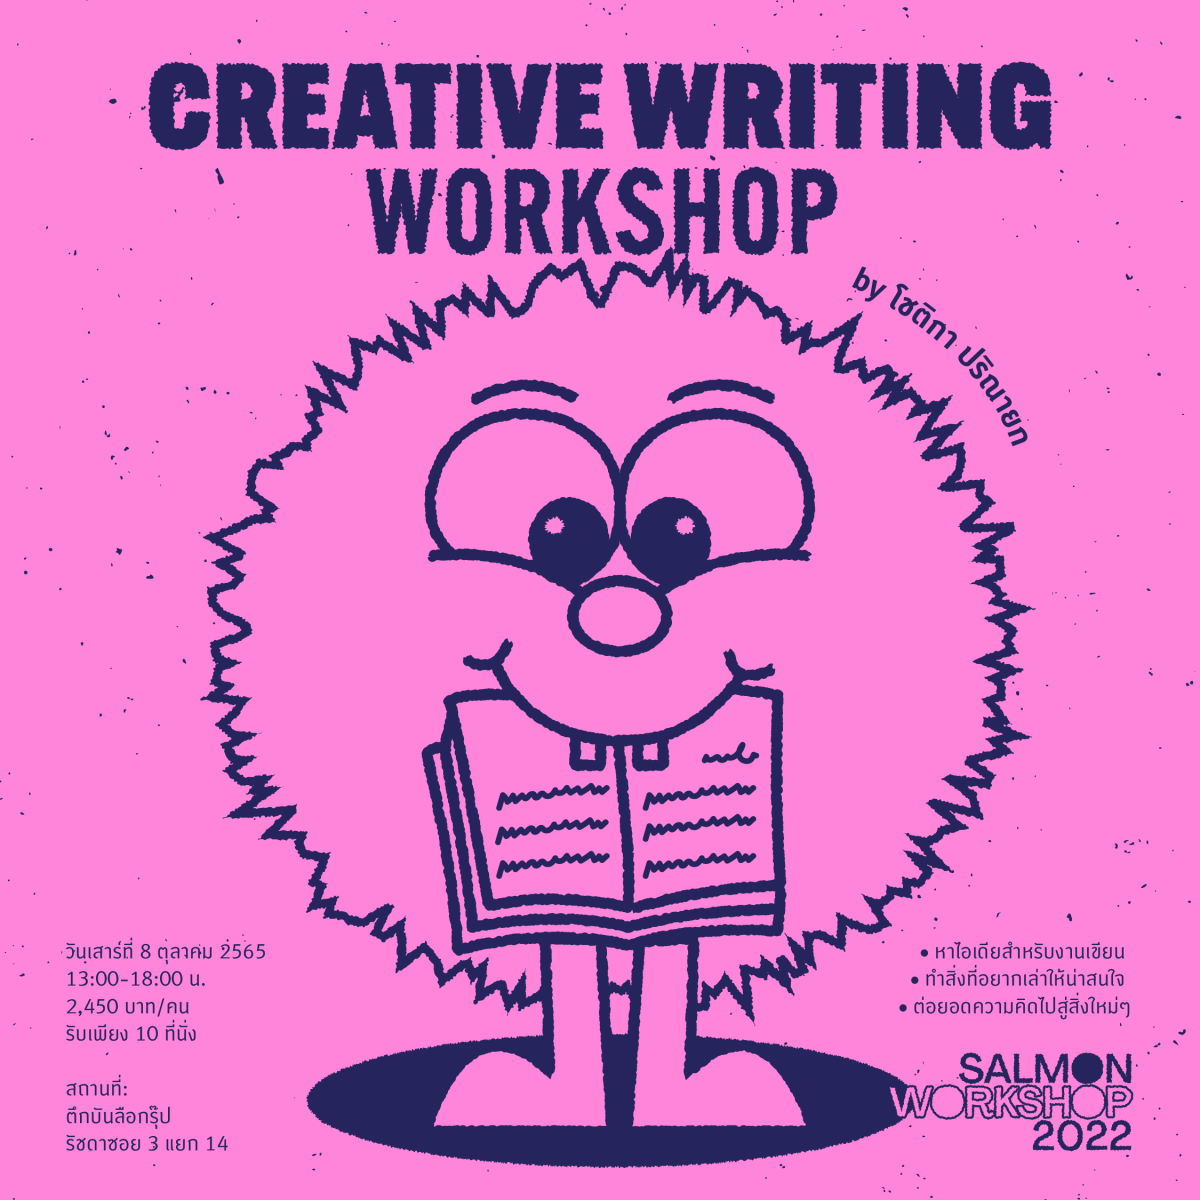 Salmon Workshop 2022: Creative Writing Workshop